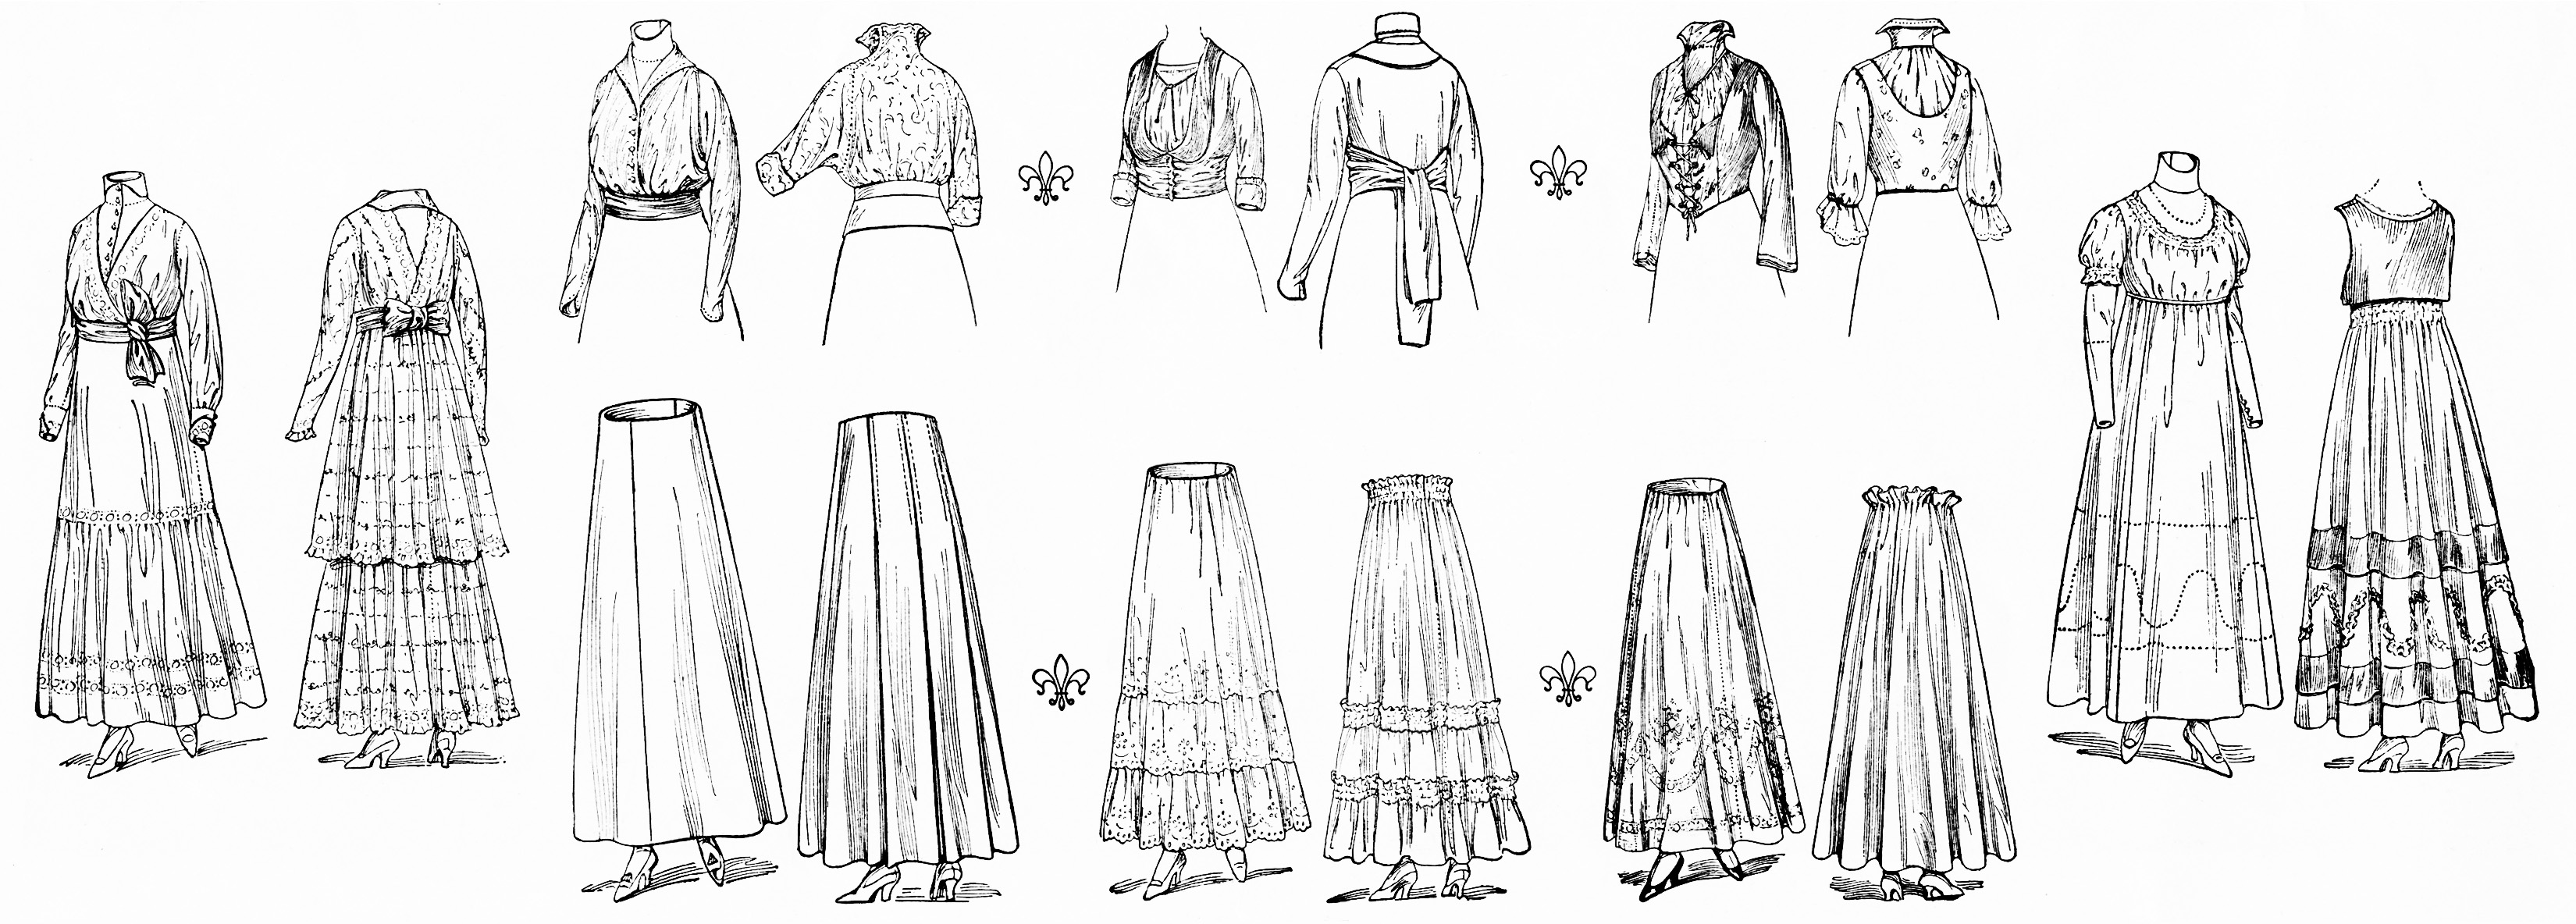 ladies vintage clothing, vintage fashion, women's clothing, 1915 ladies fashion, free vintage image, free vintage clipart clothing